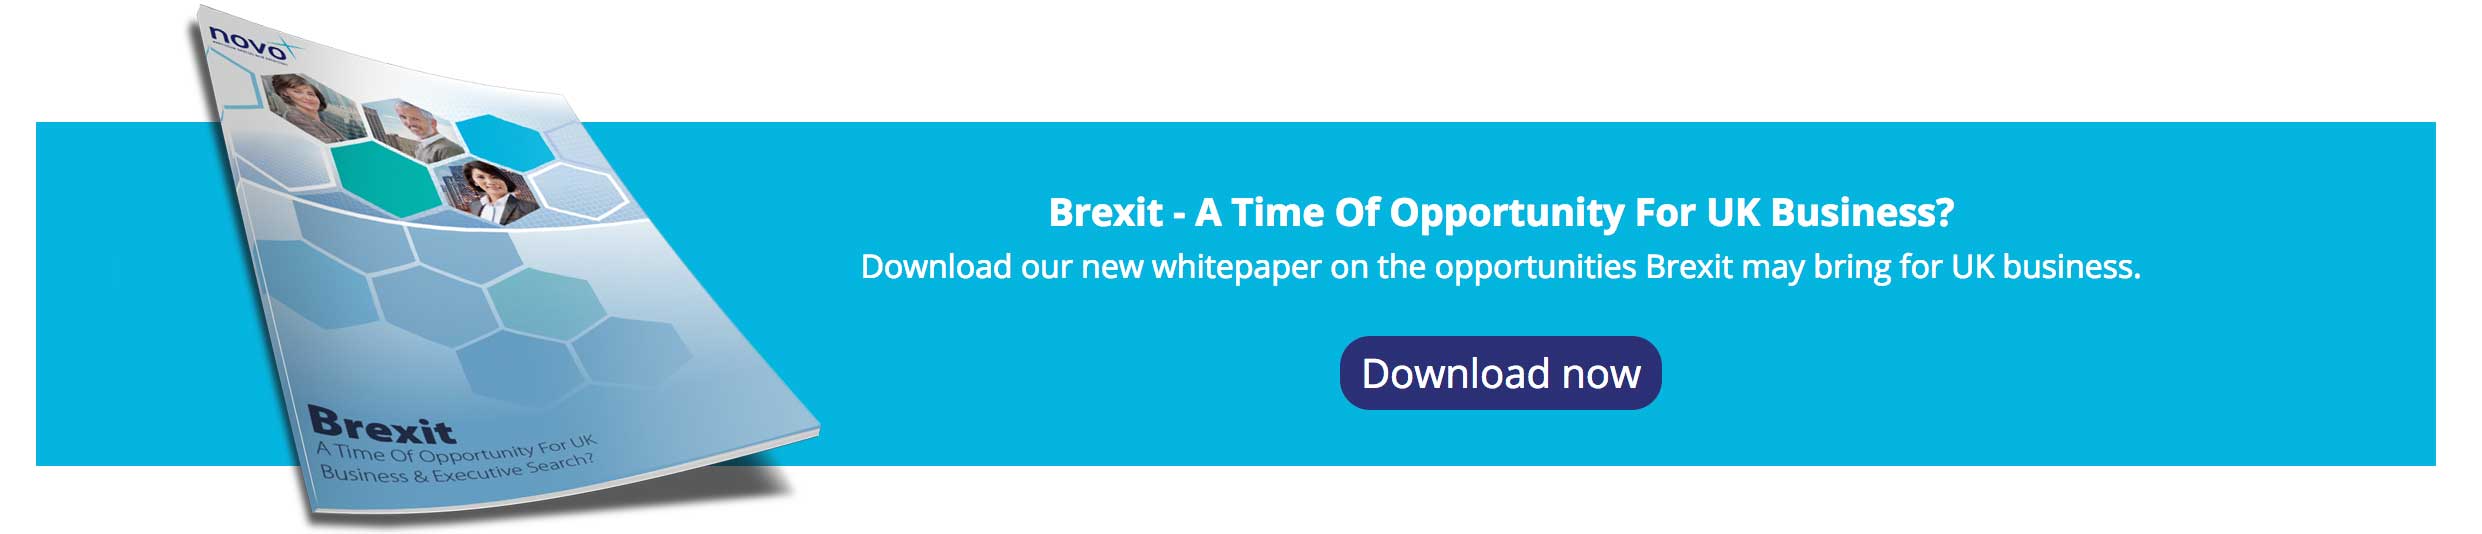 Brexit Whitepaper